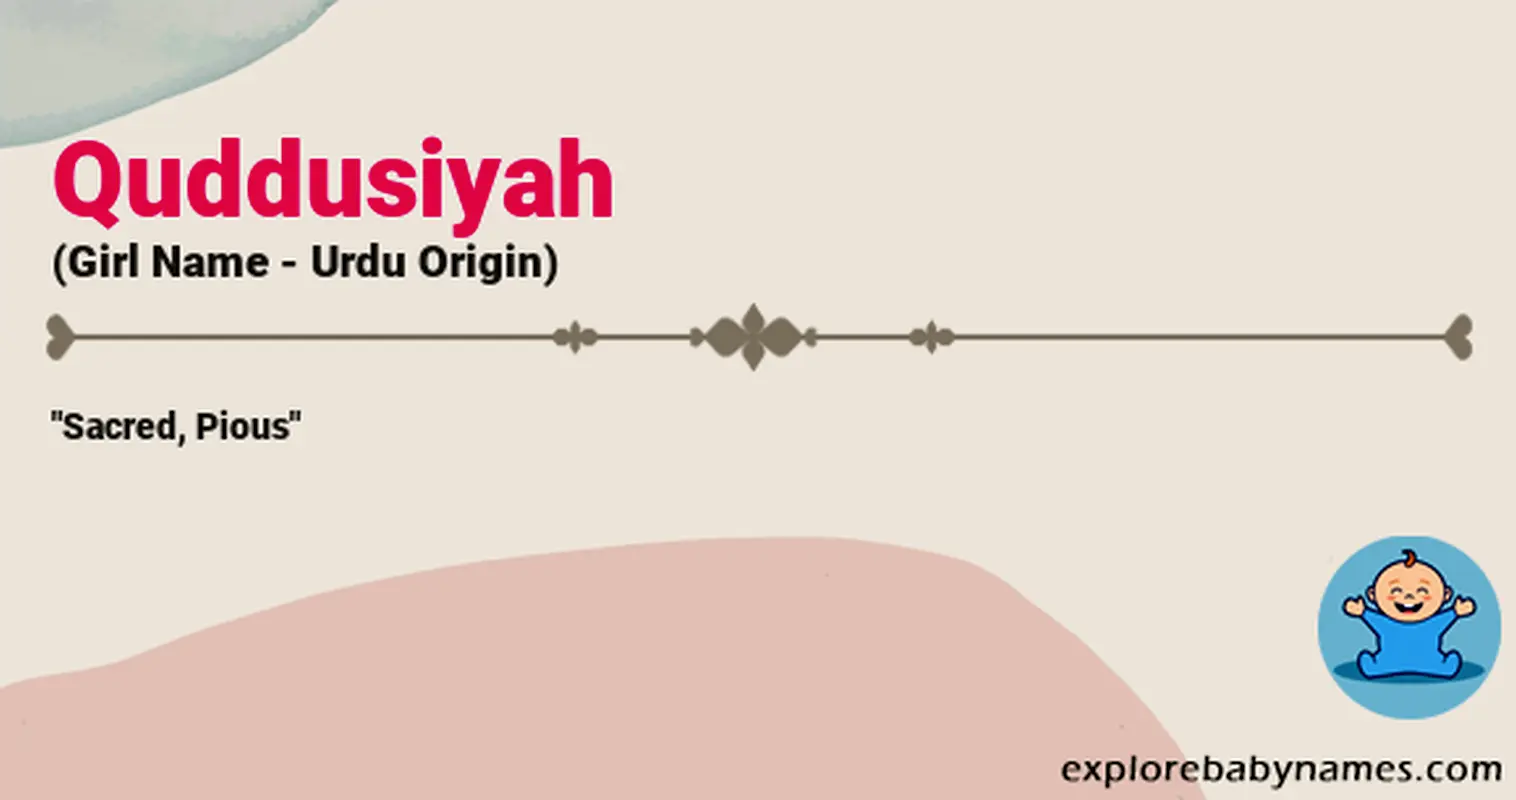 Meaning of Quddusiyah